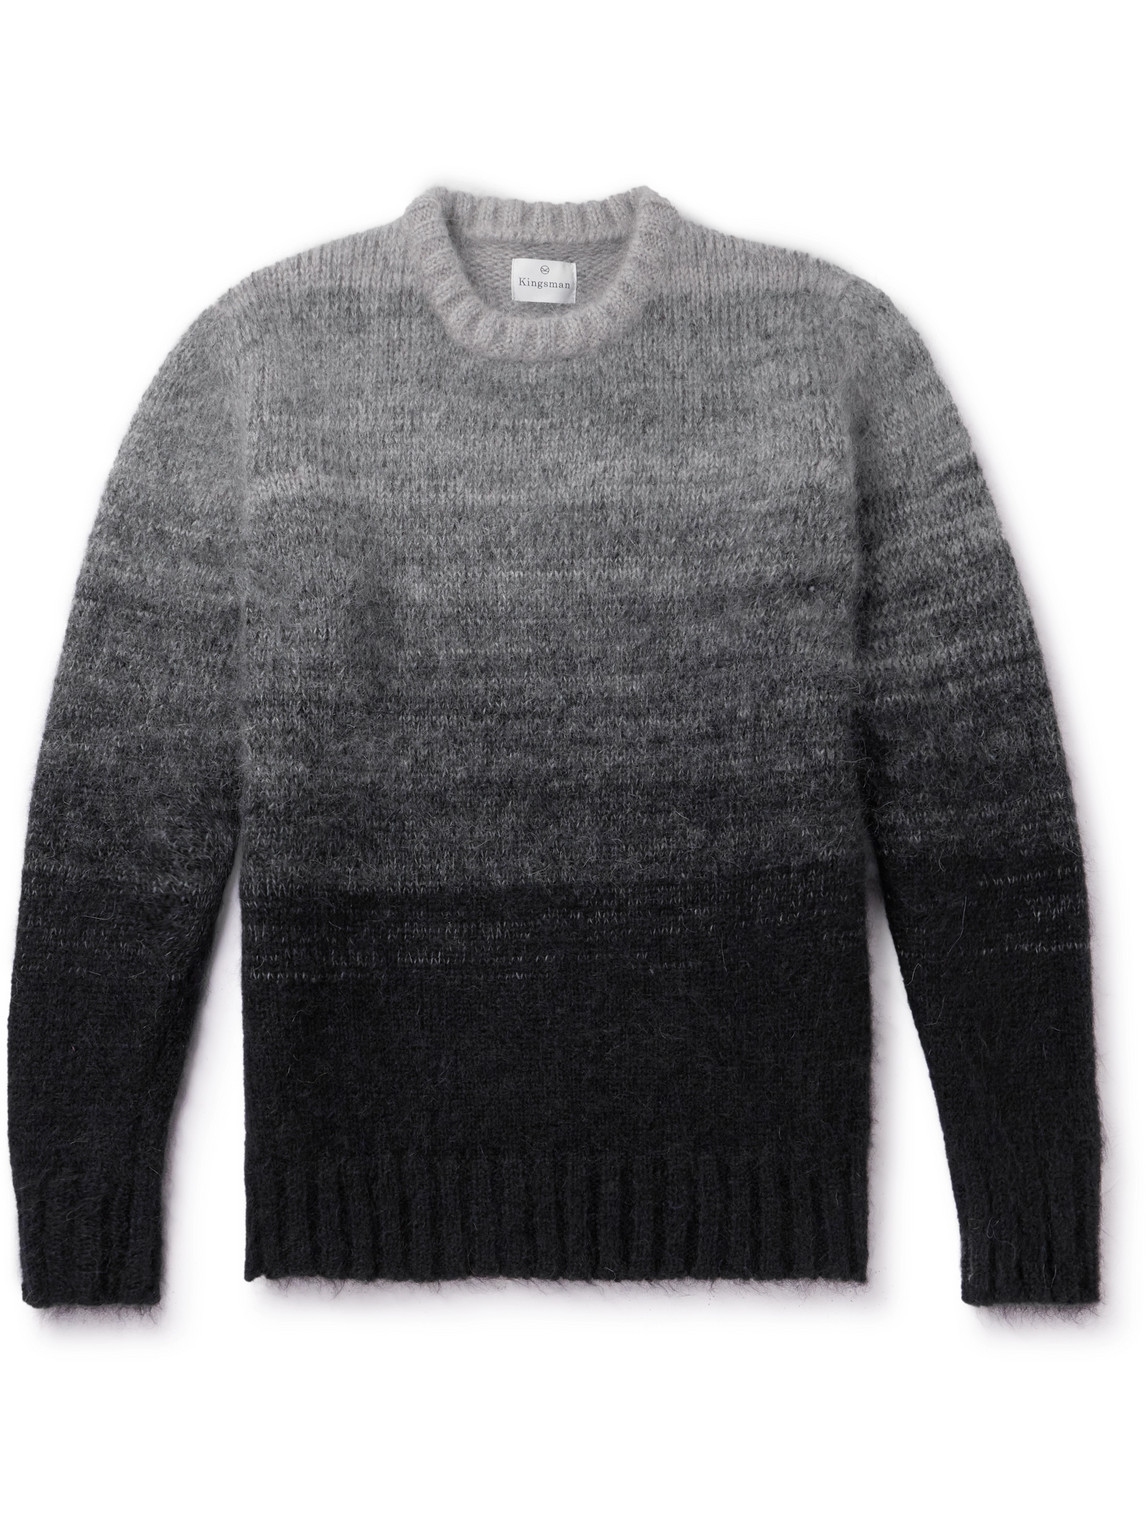 Kingsman Dégradé Knitted Jumper In Grey